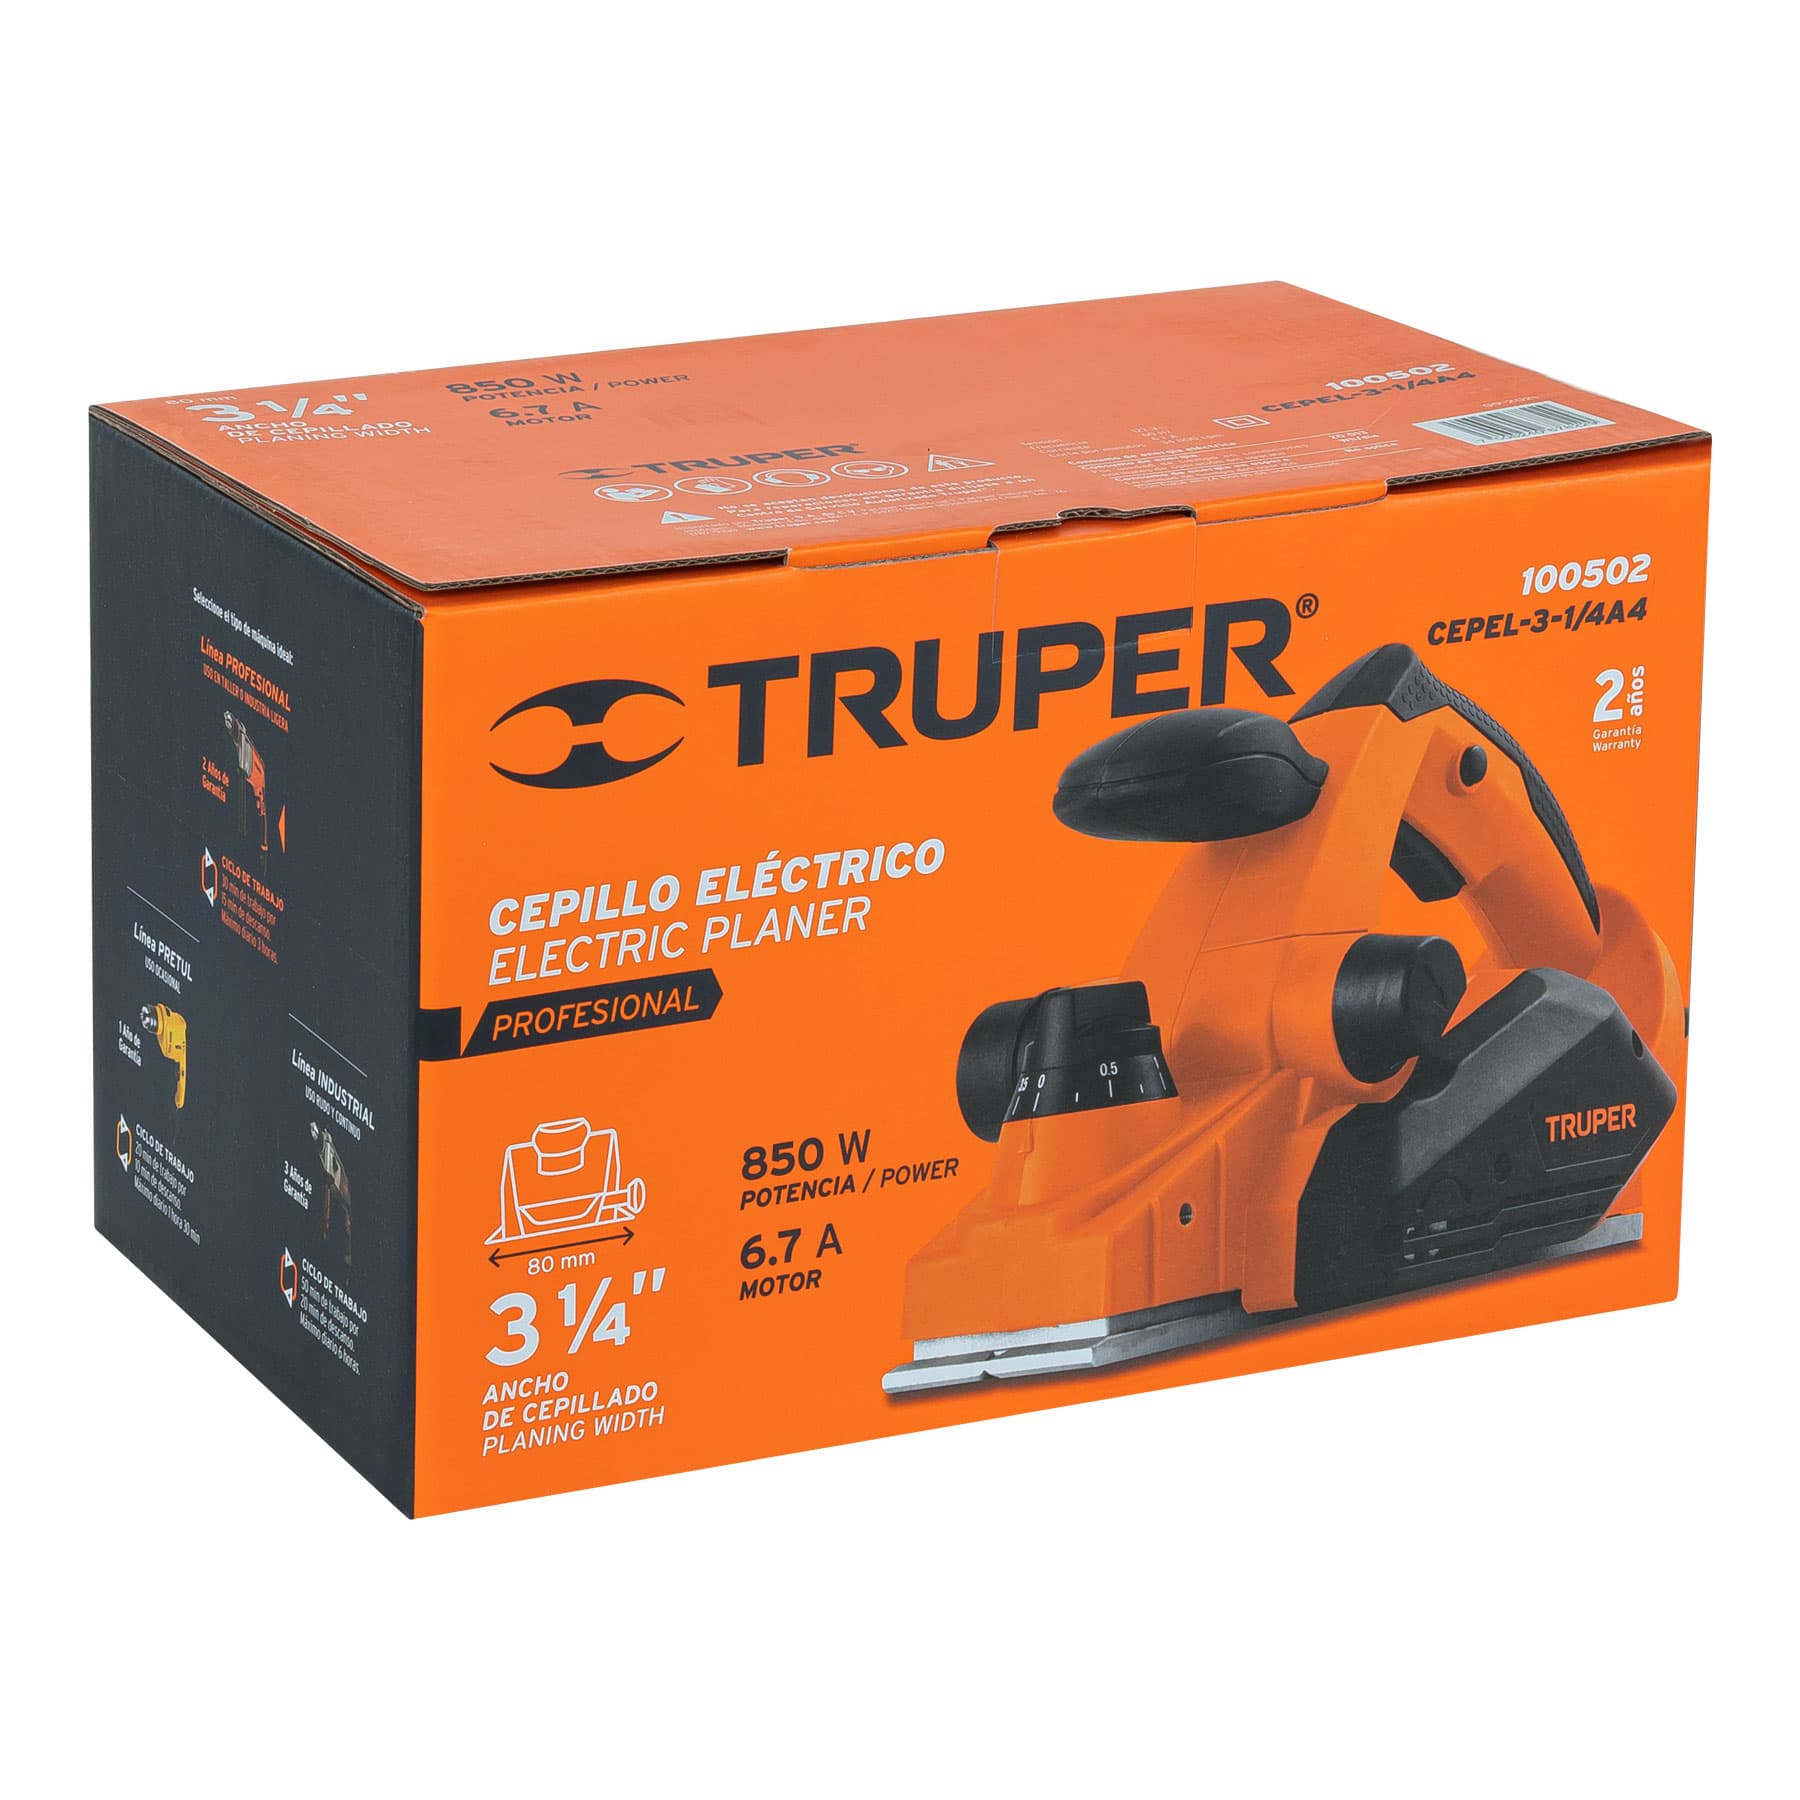 Cepillo eléctrico 3-1/4 850 W, profesional, Truper